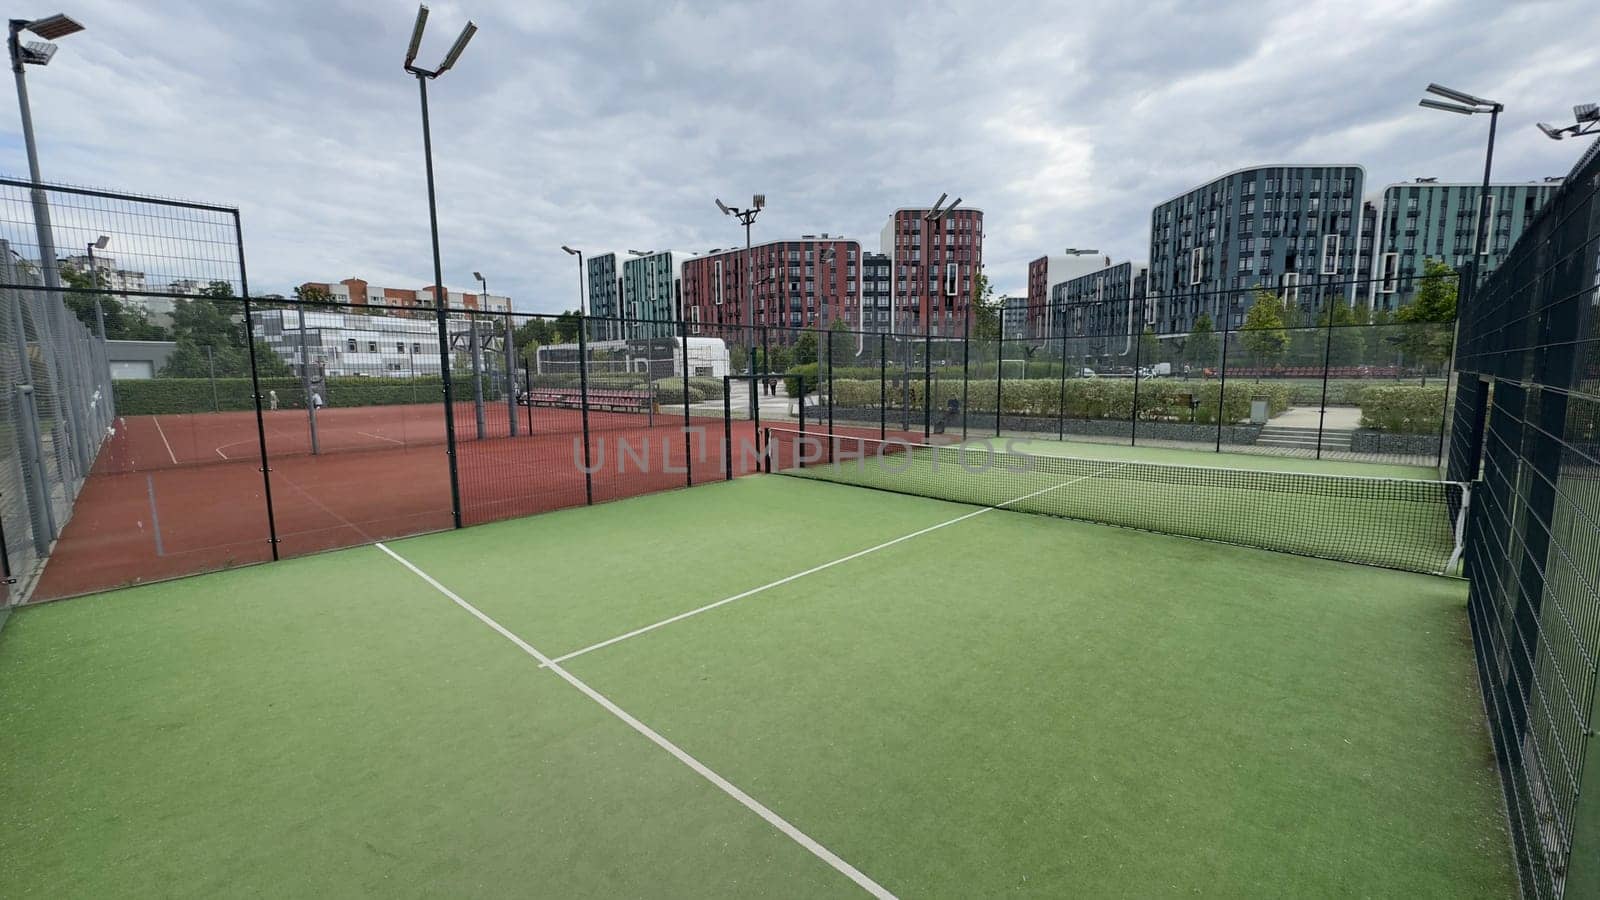 tennis padel court grass turf. High quality photo